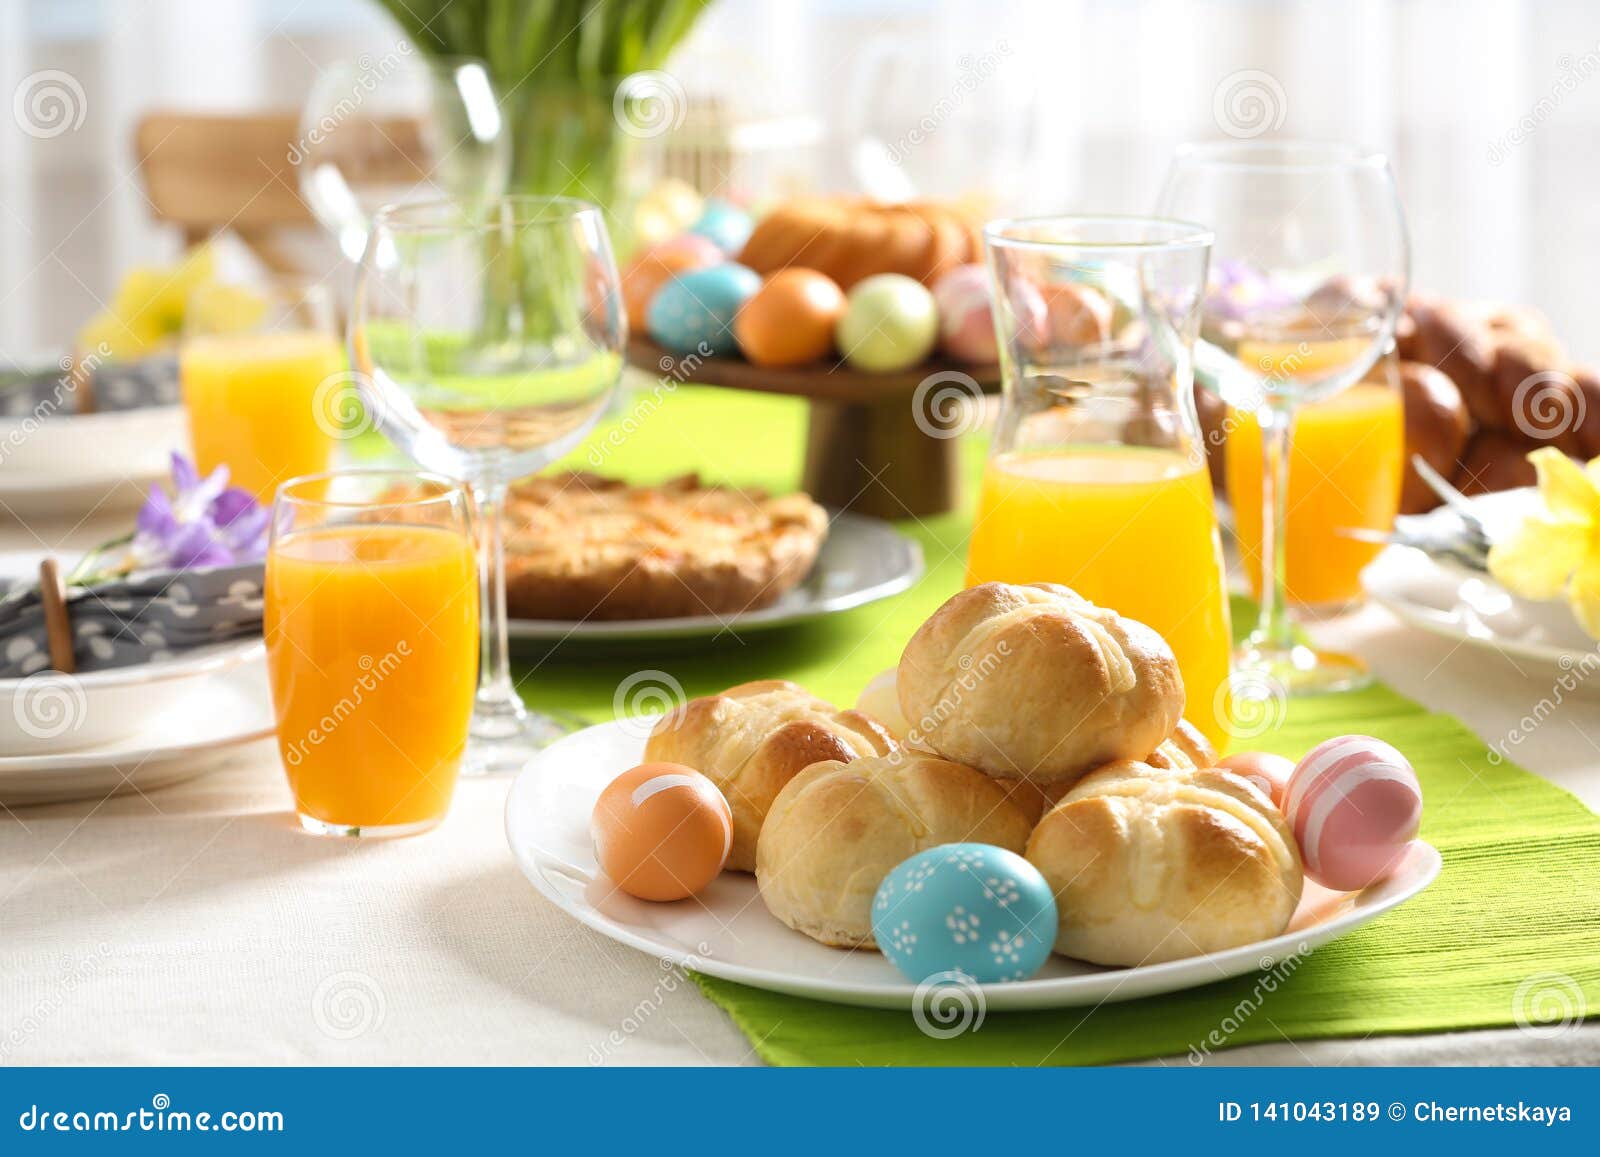 Festive Easter Table Setting Stock Image - Image of background ...